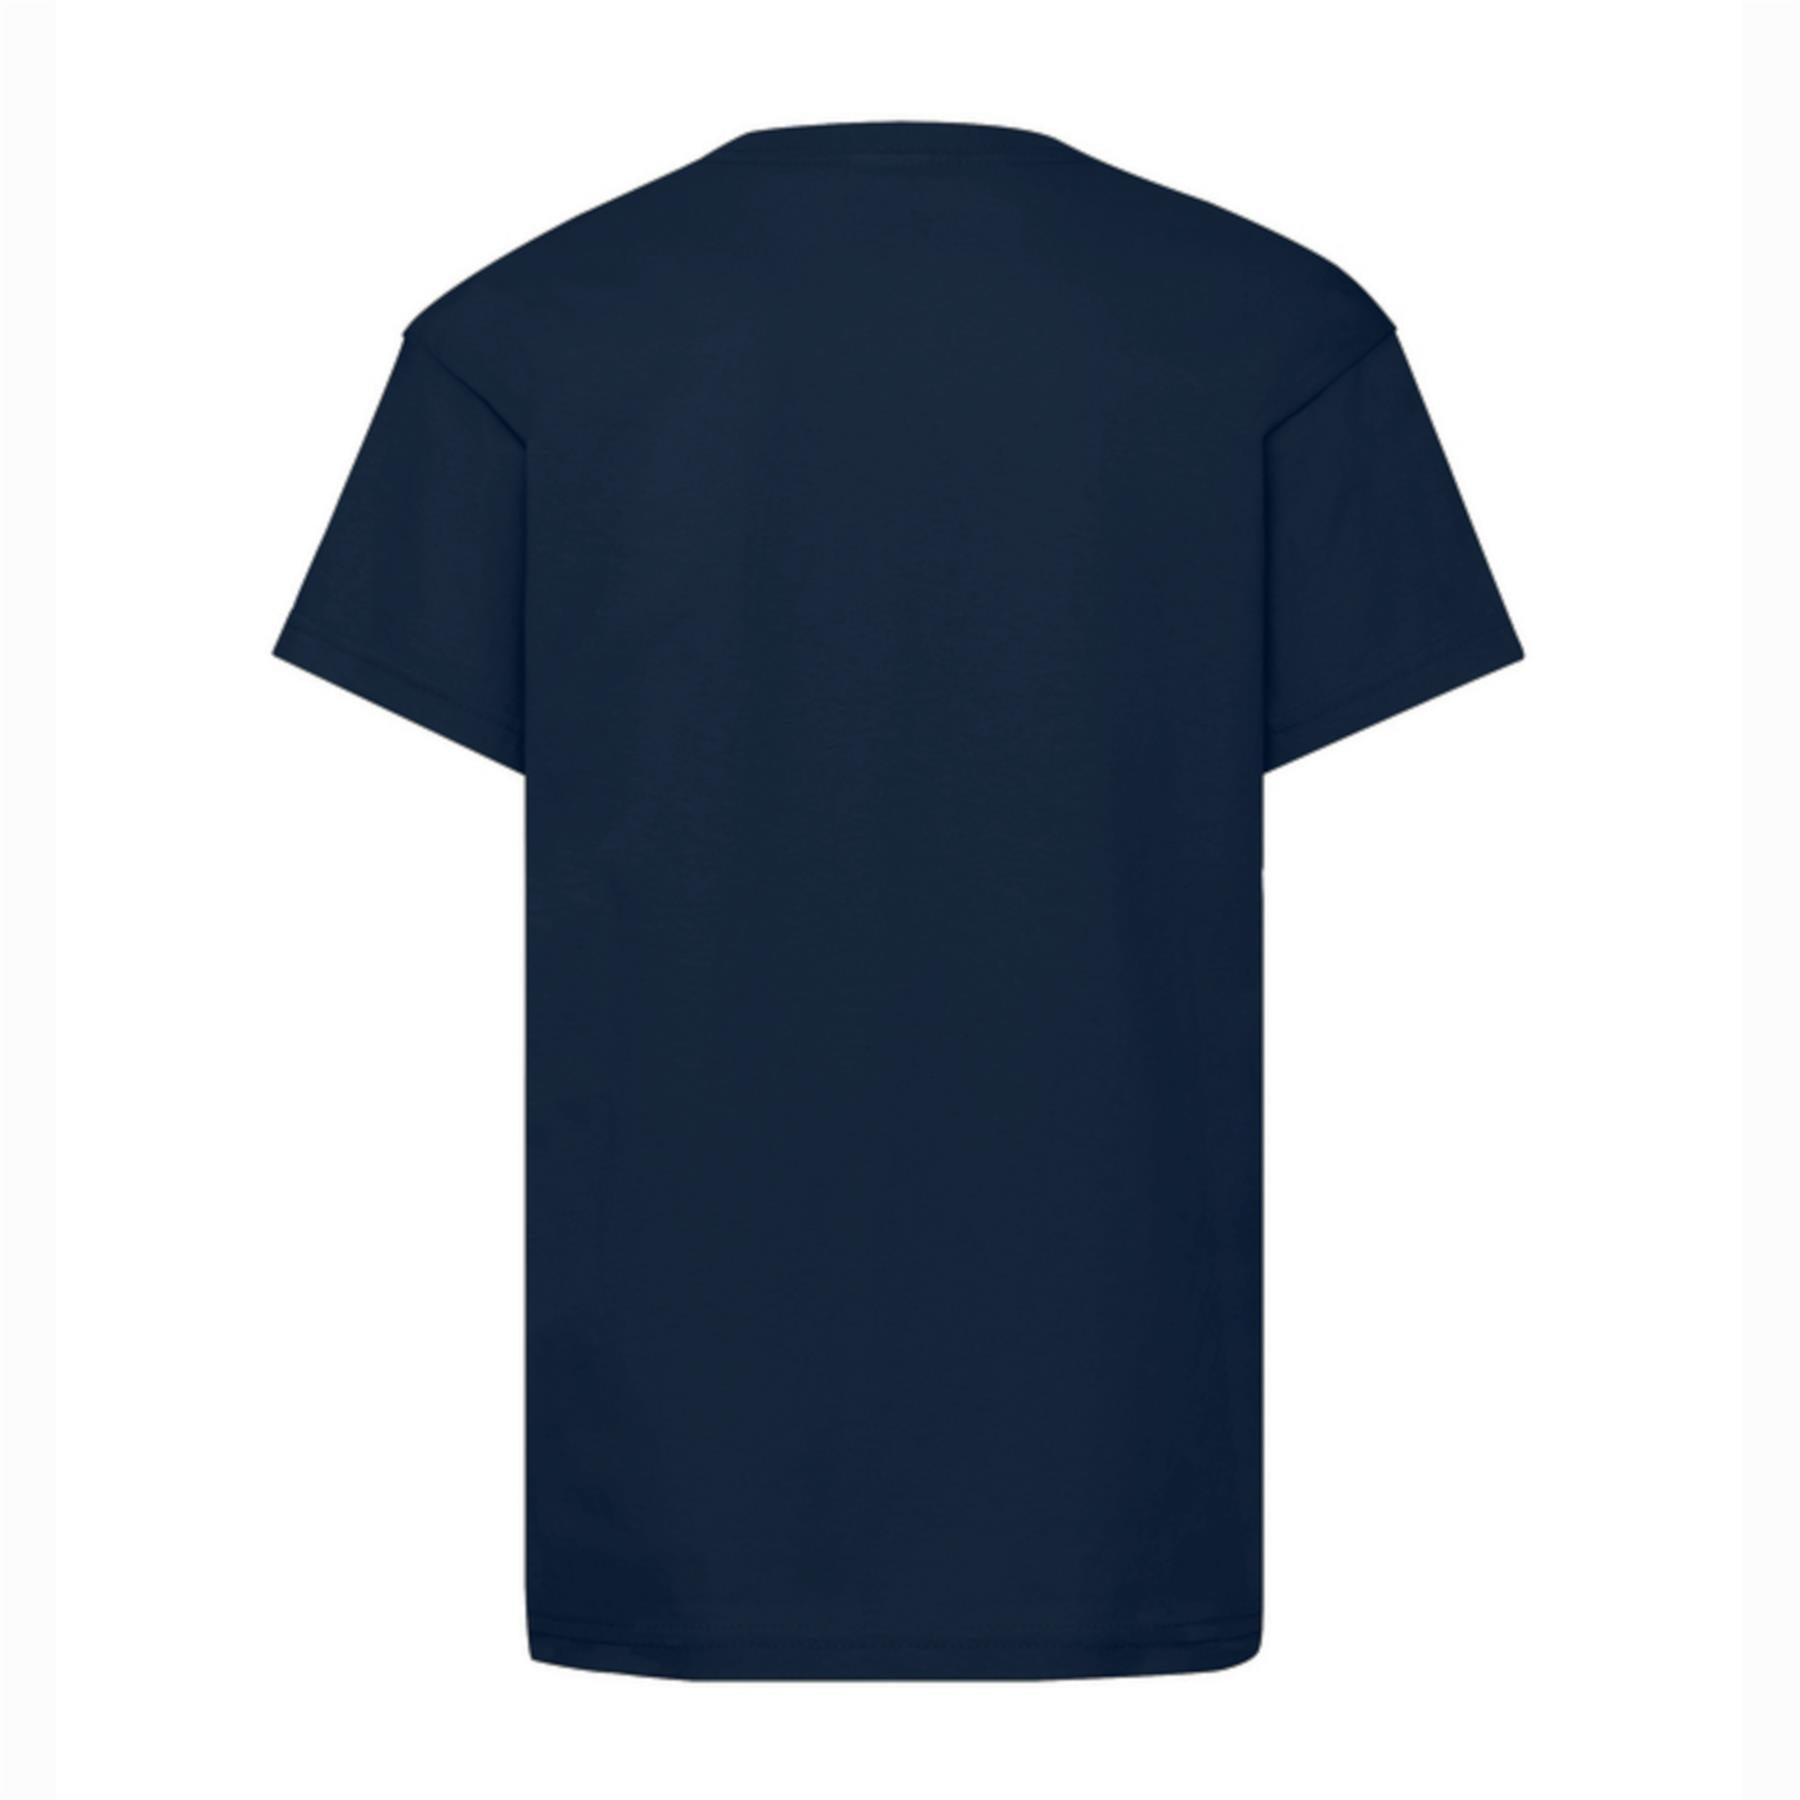 Unisex Navy Short Sleeve Plain T-Shirt